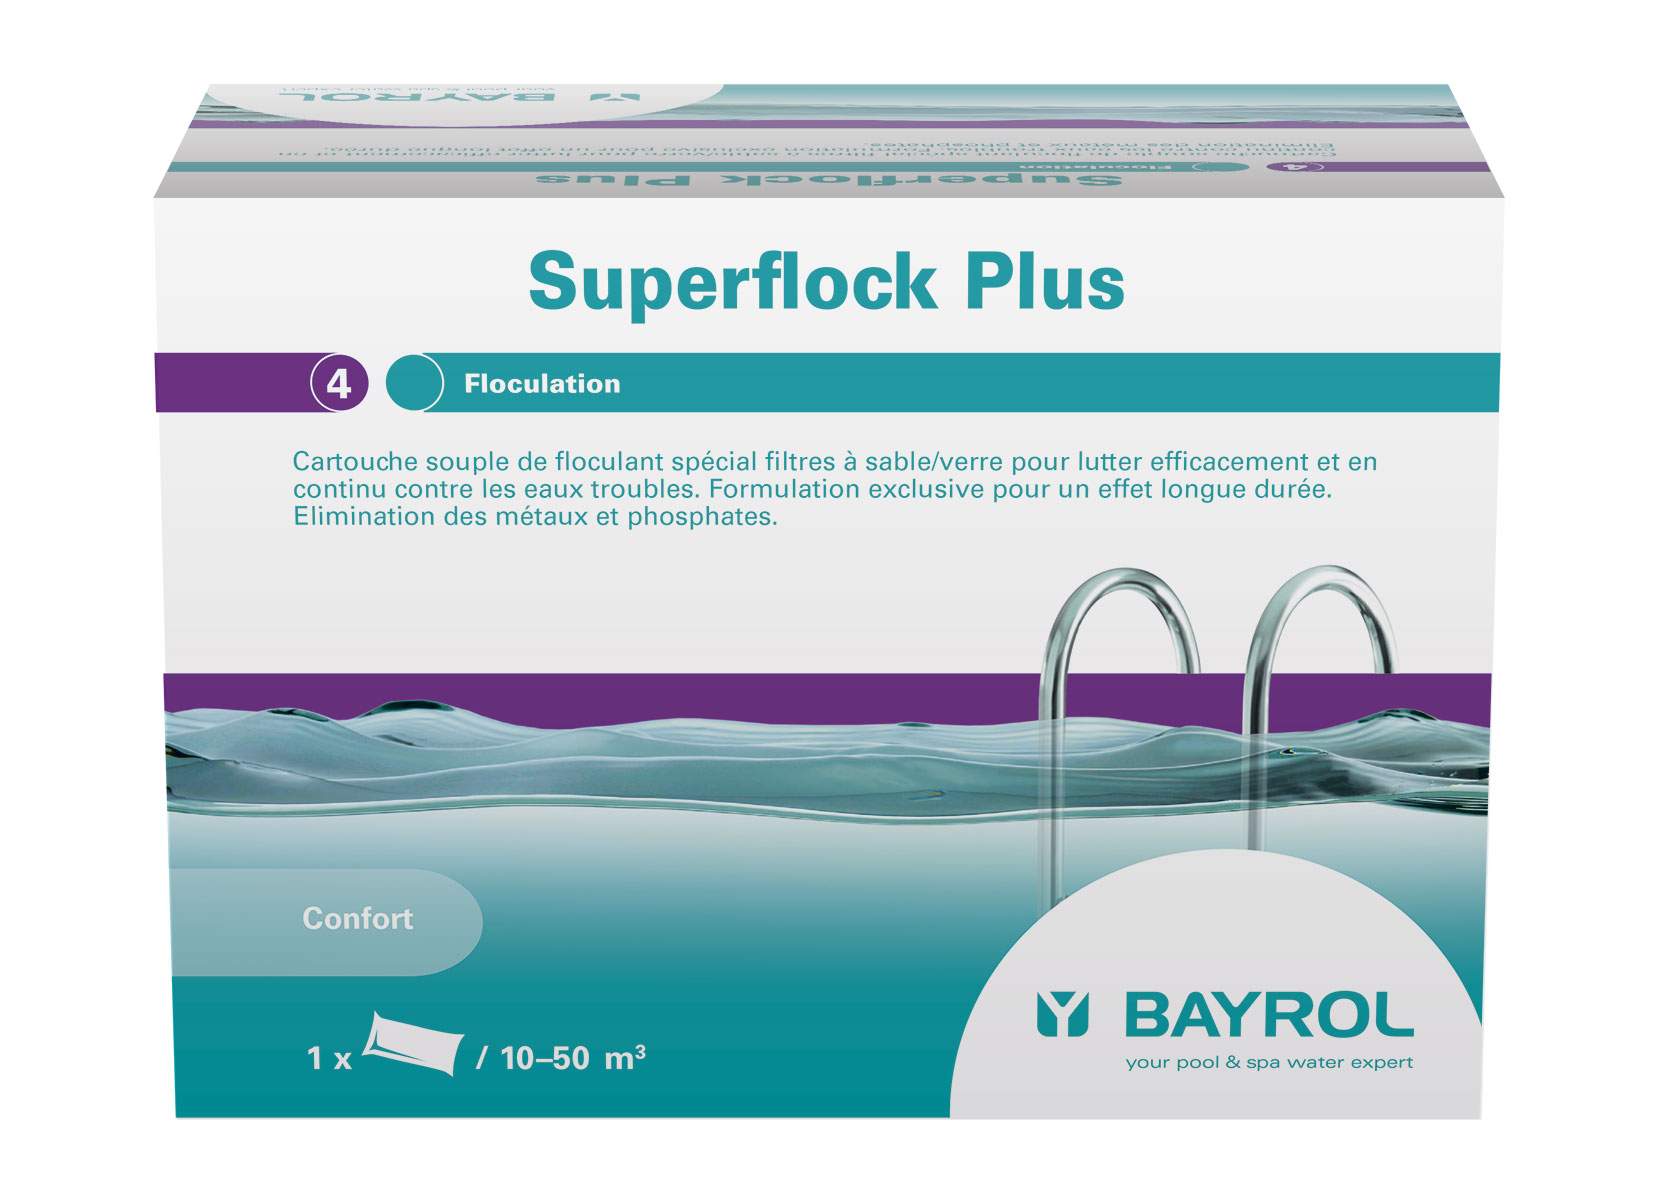 Caja de Superflock de 8 cartuchos de Bayrol